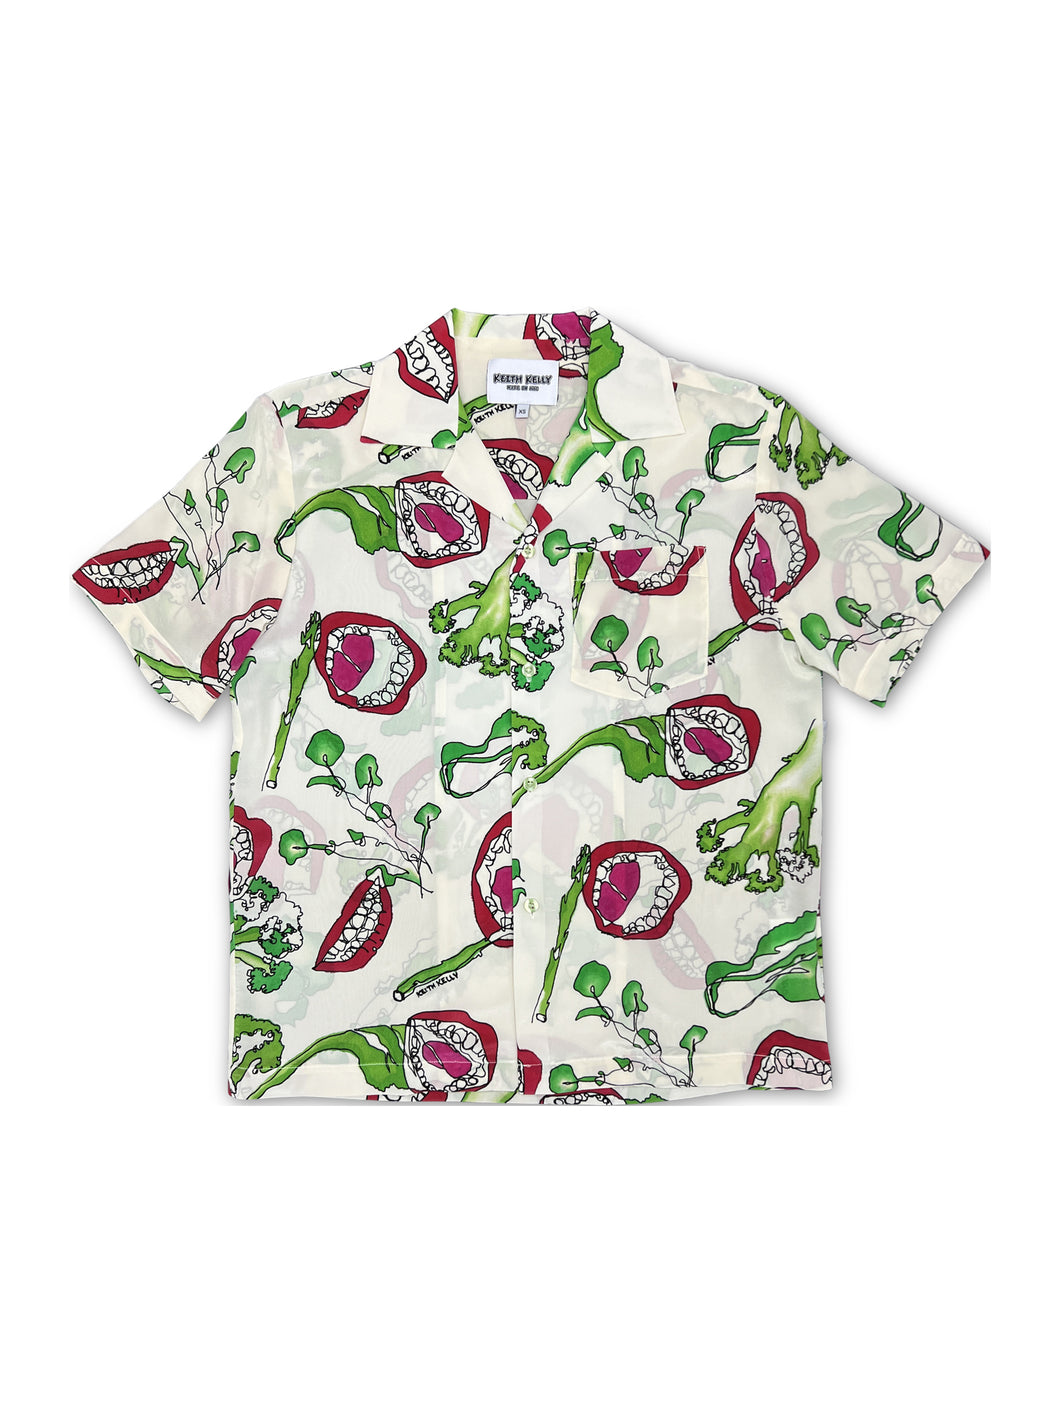 Eat Your Greens Silk Shirt